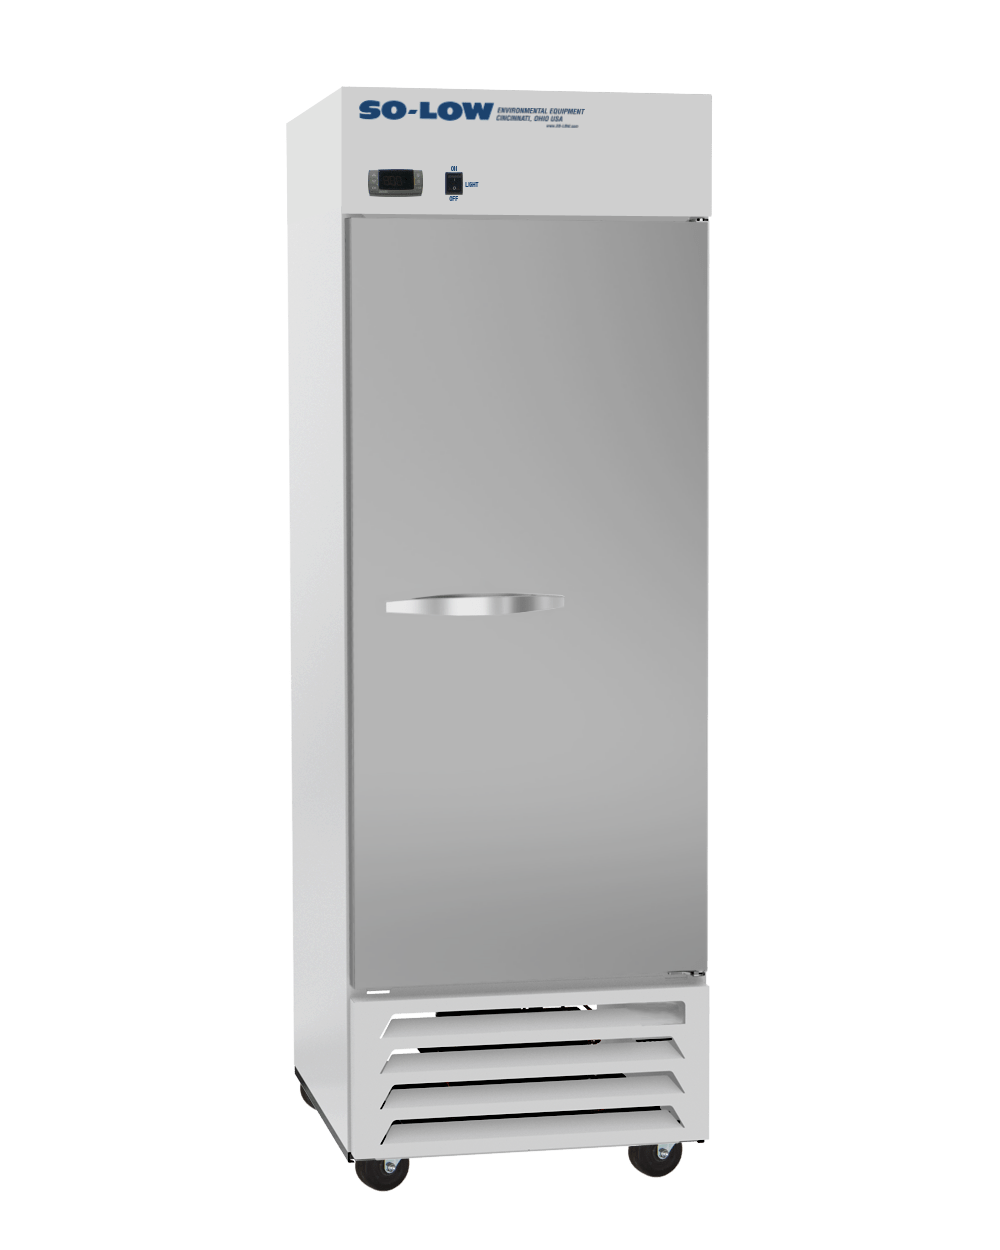 Solid Door Refrigerators So-Low 2ºC to 8ºC, 23 cu.ft., single solid door, Cycle Defrost, 115v